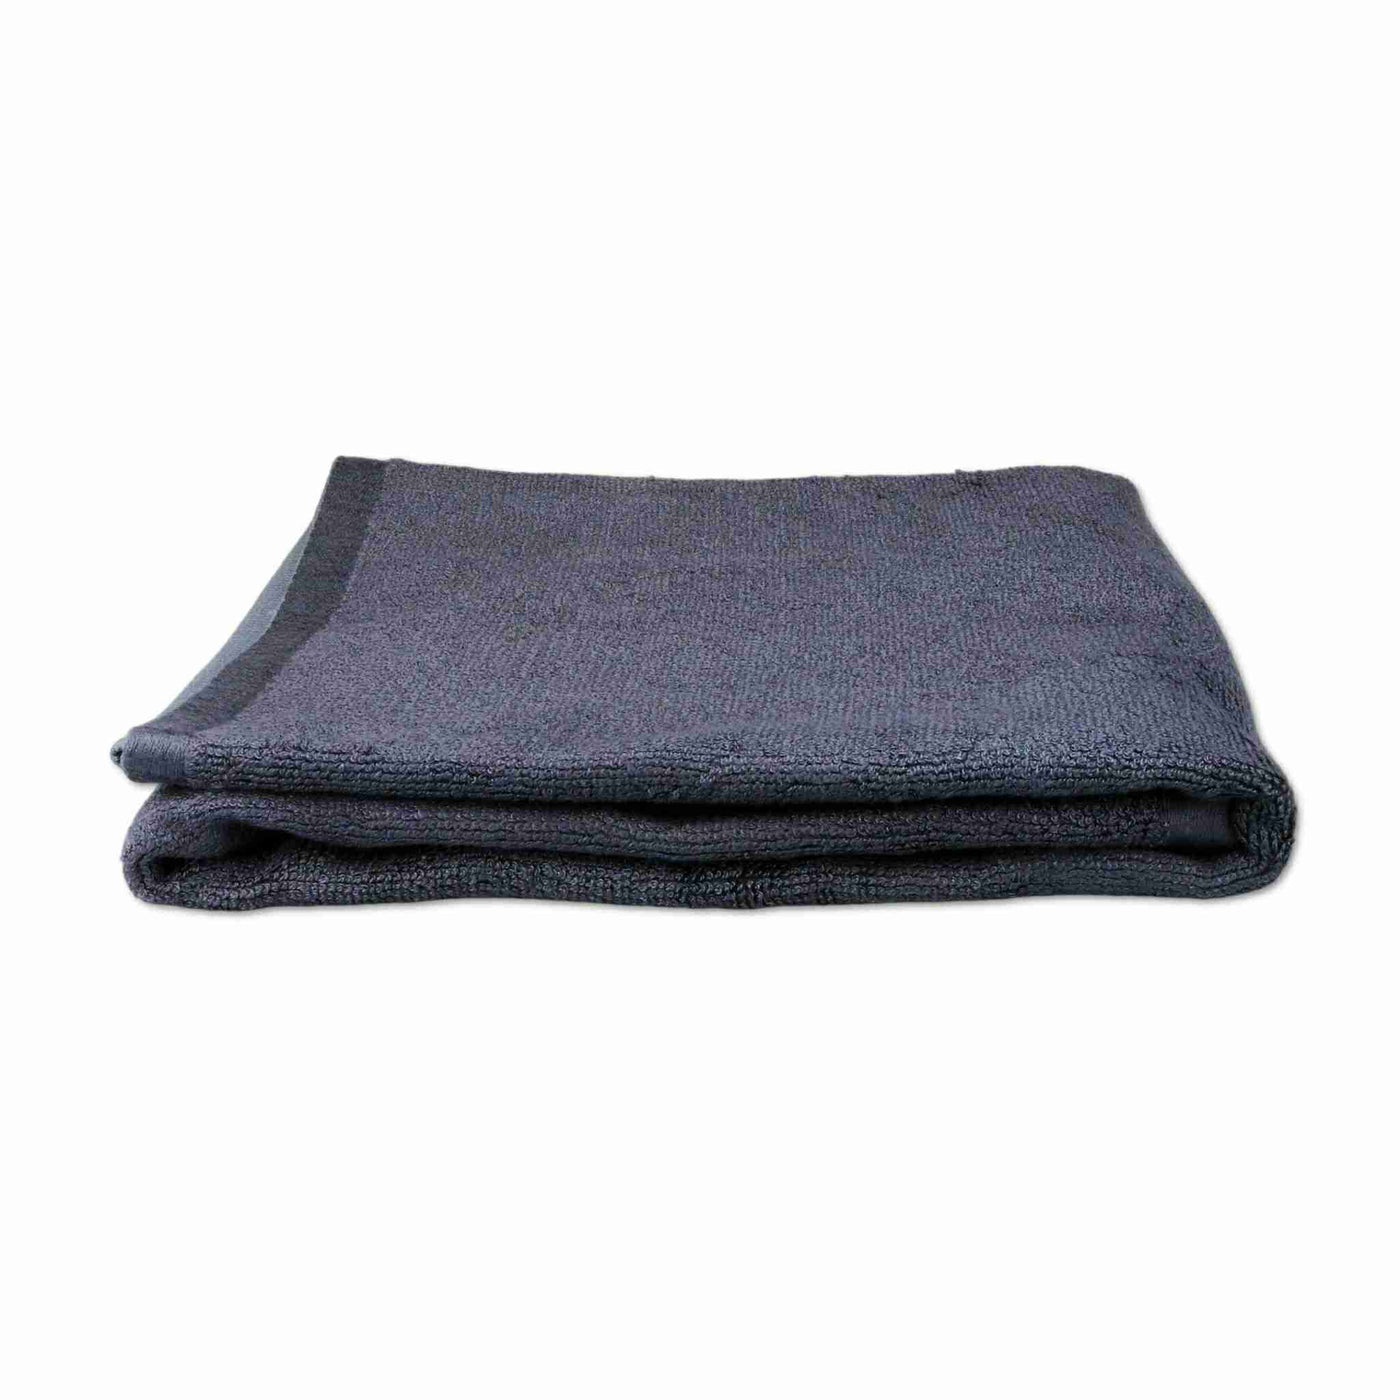 Black grey bamboo towel